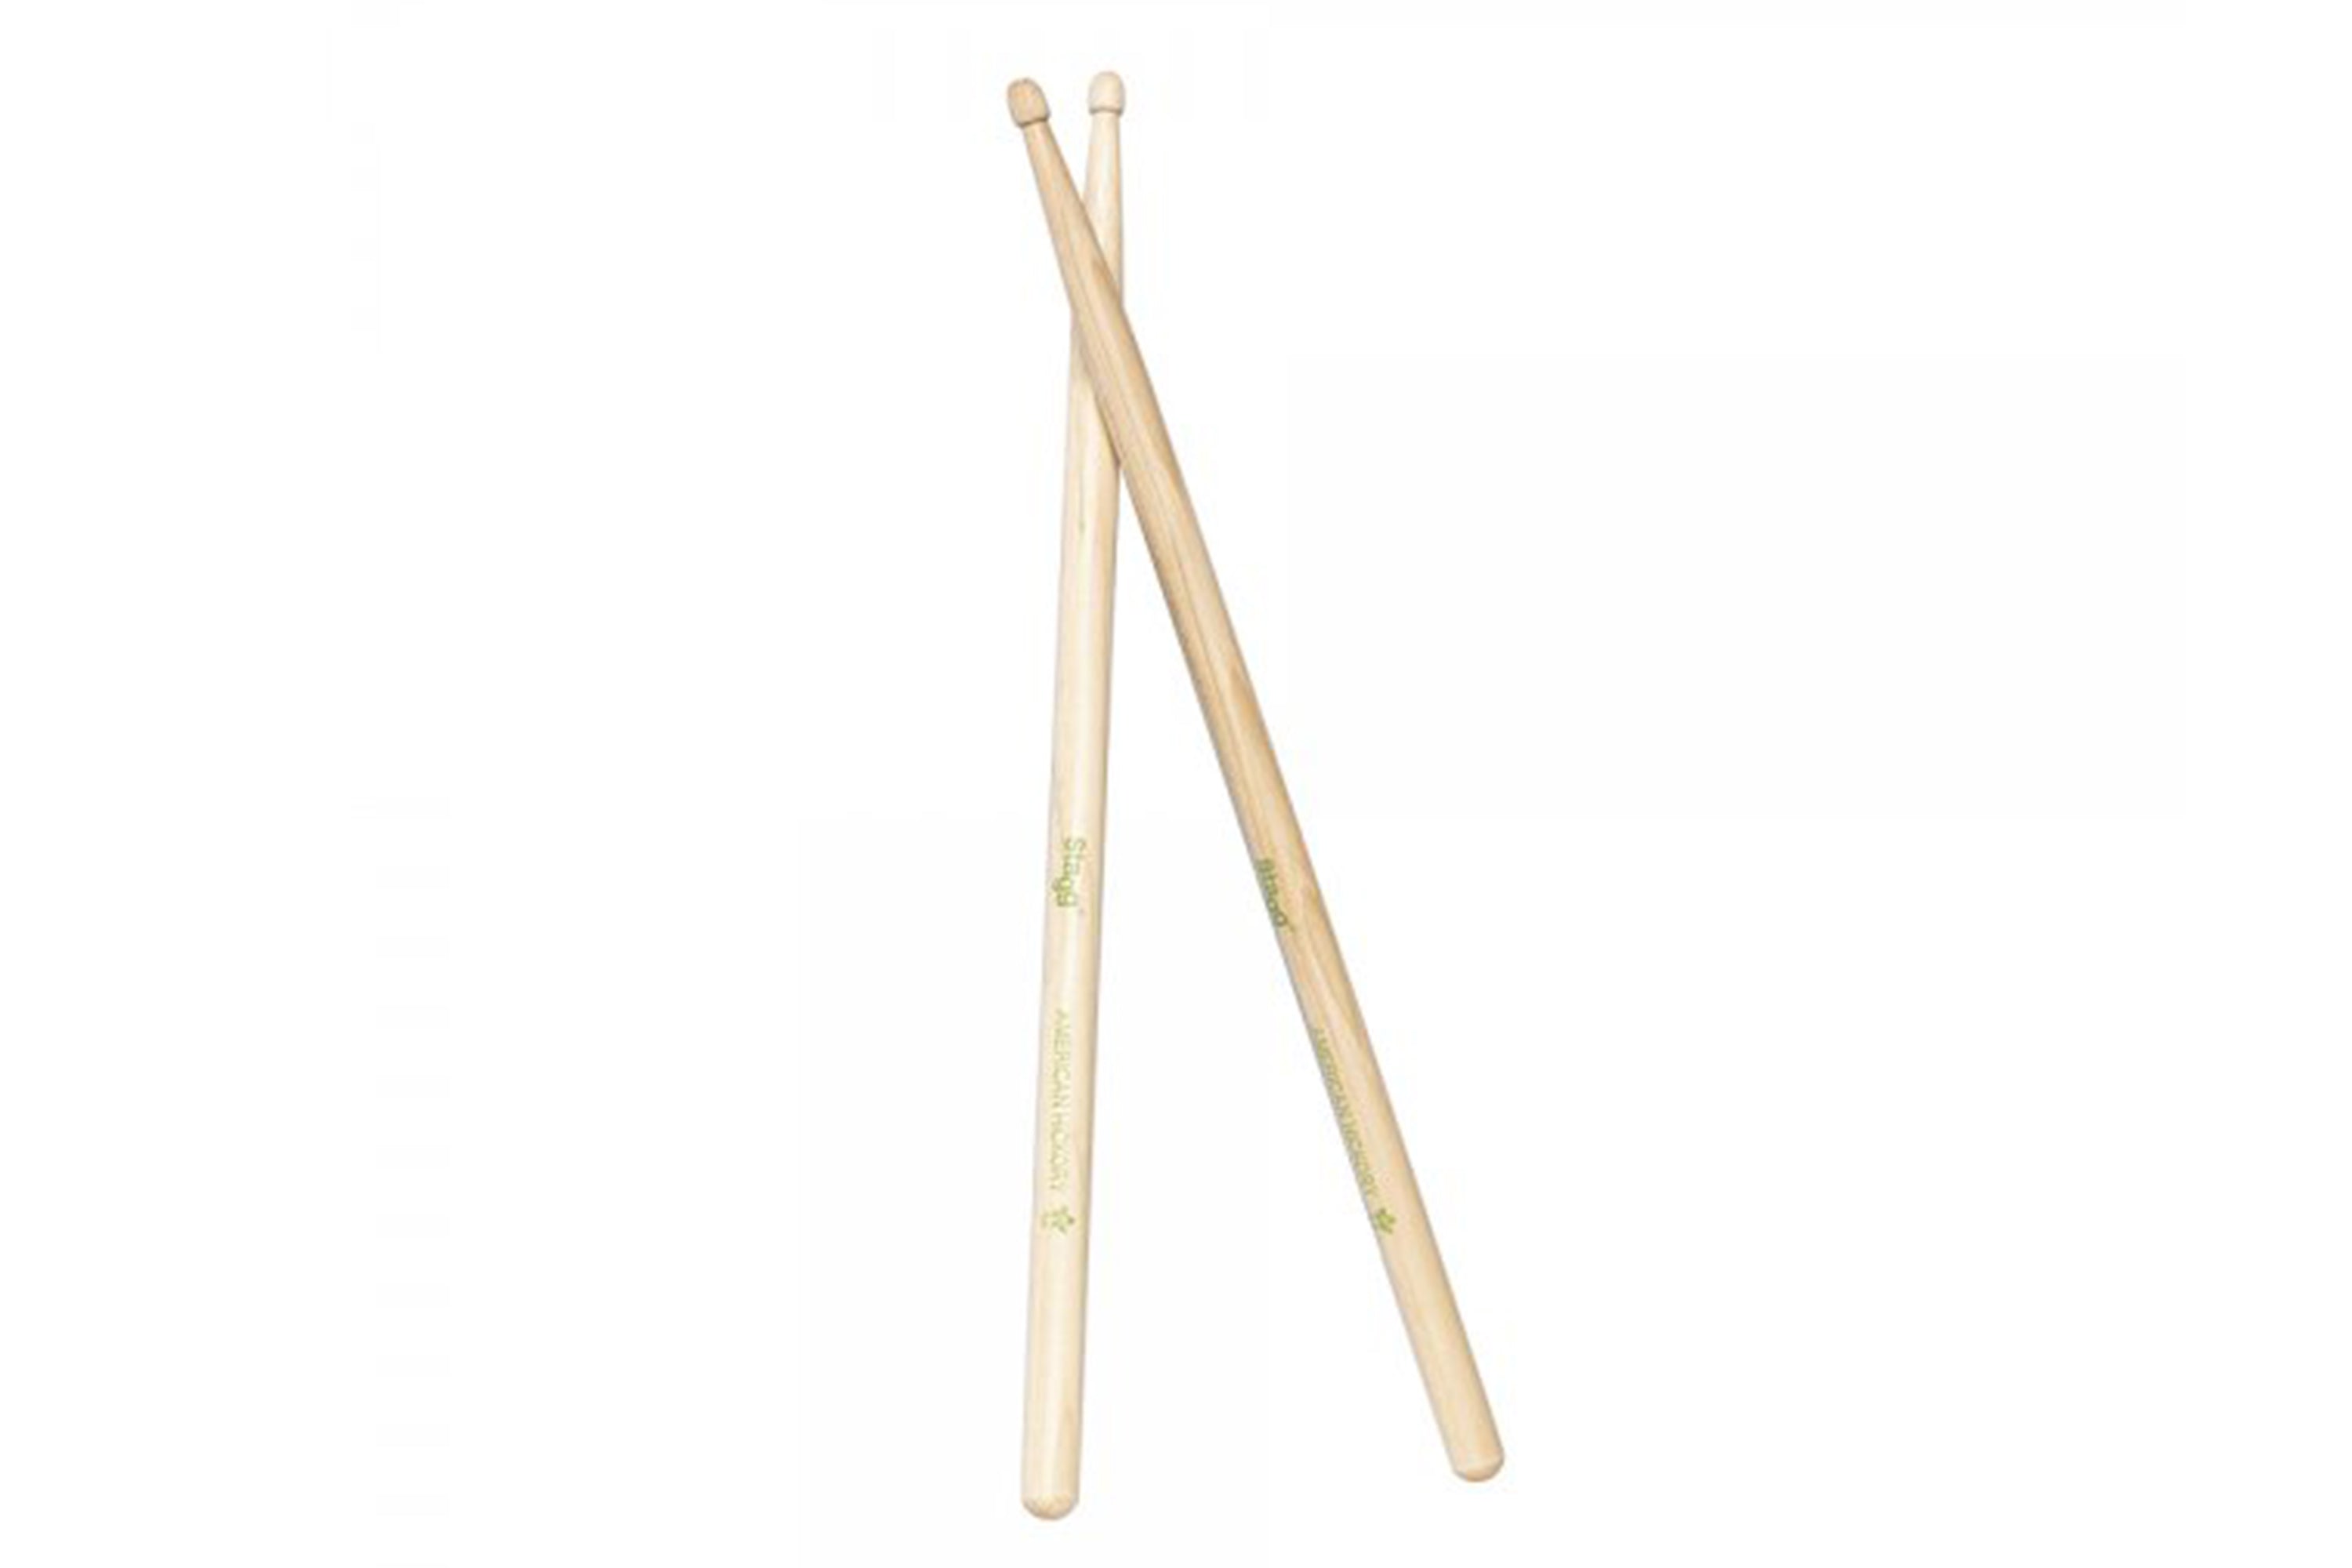 Stagg SHV5A Pair Of Hickory Drum Sticks V Series 5A Wood Tip